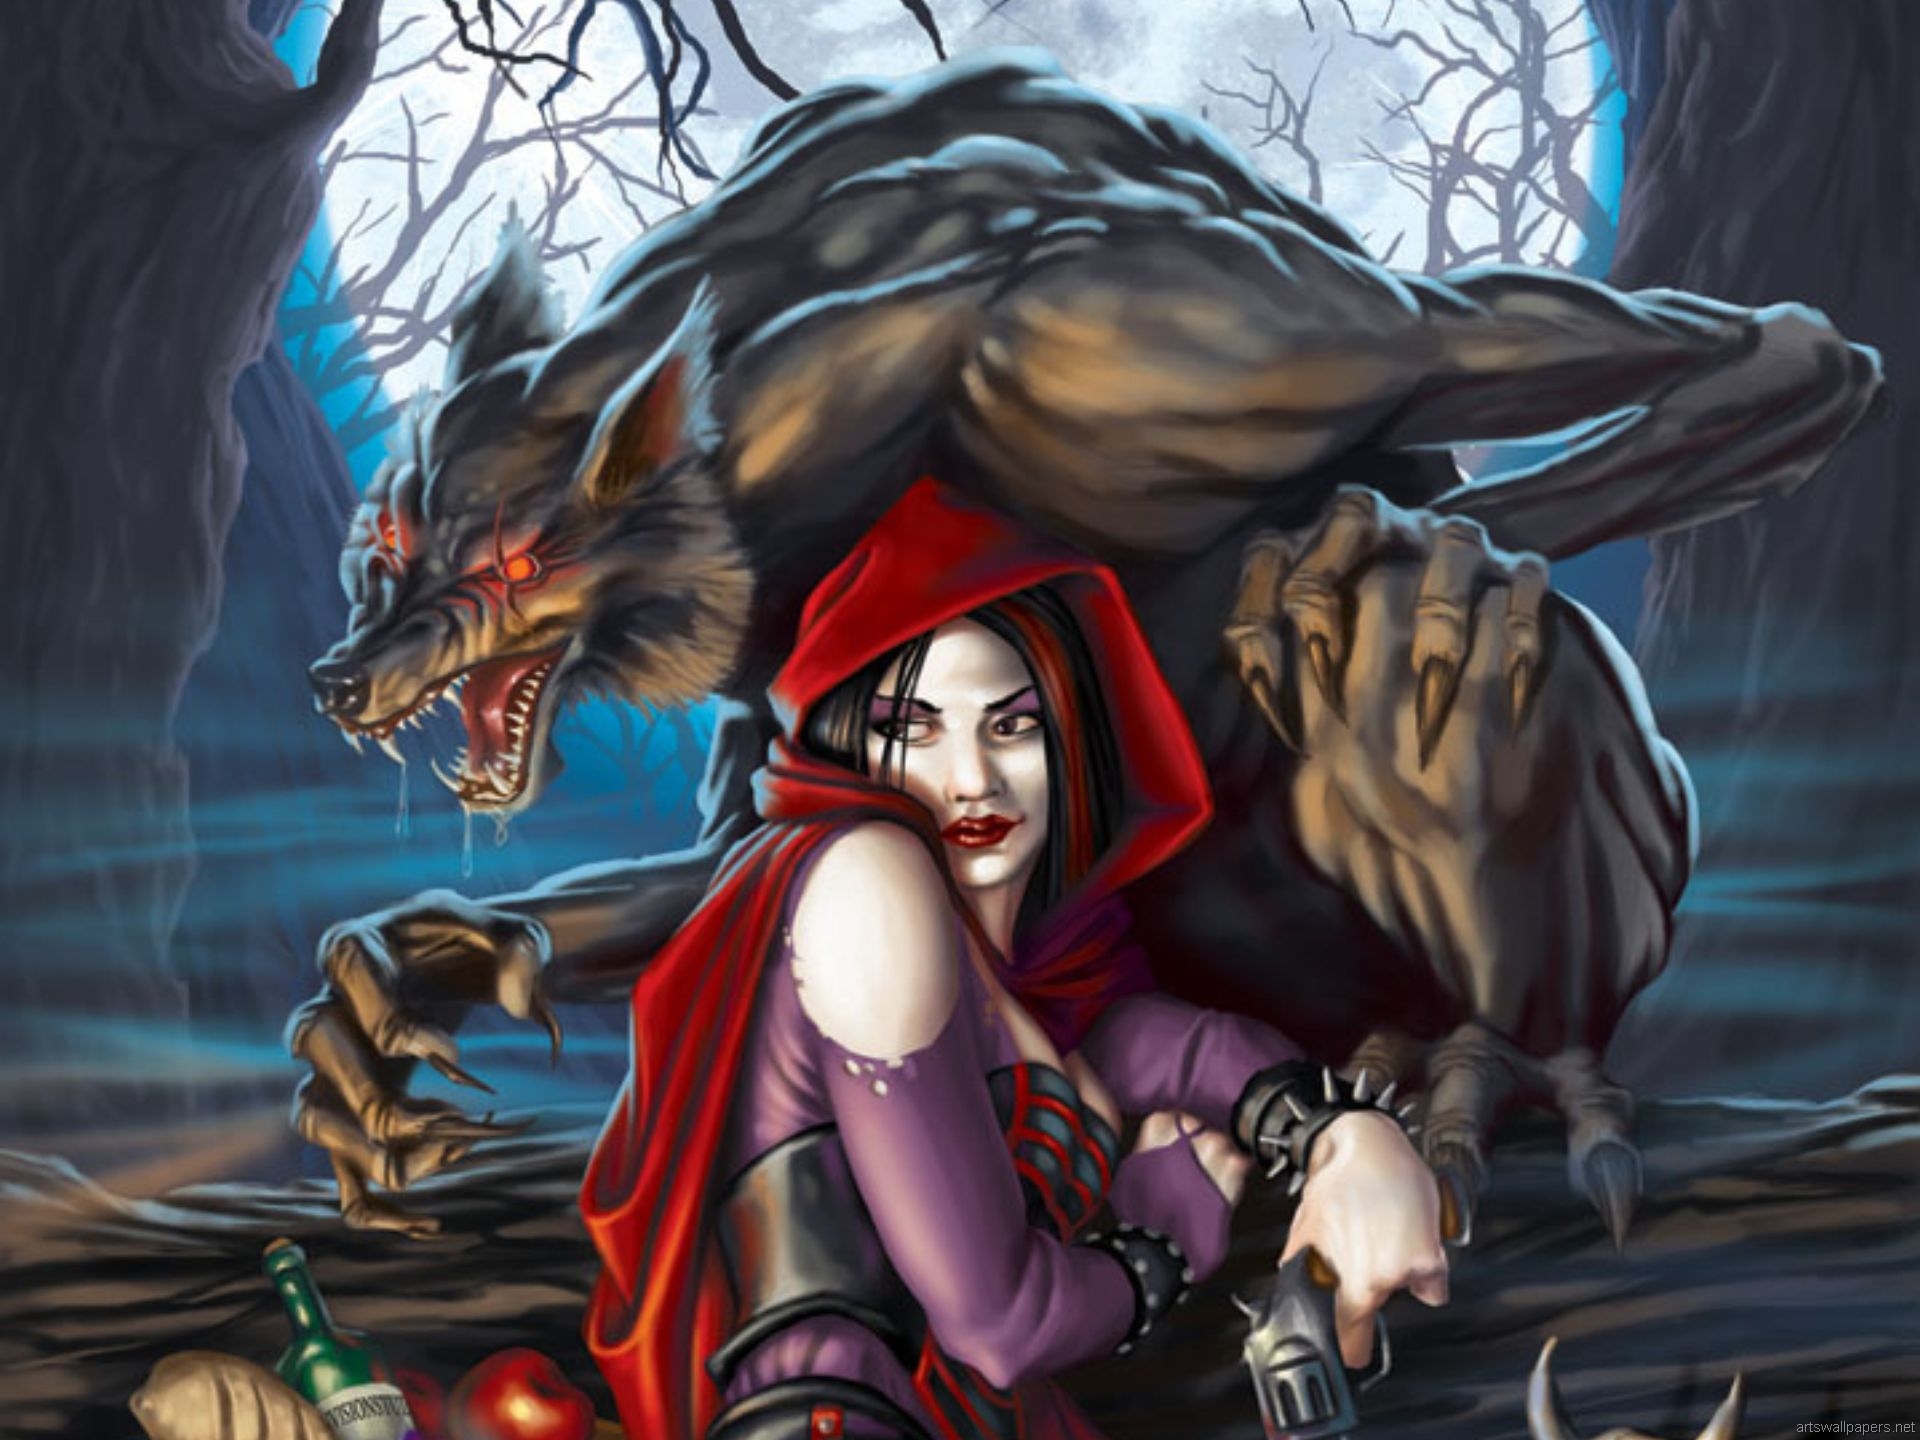 Fantasy-inspired depiction of Red Riding Hood for desktop wallpaper.